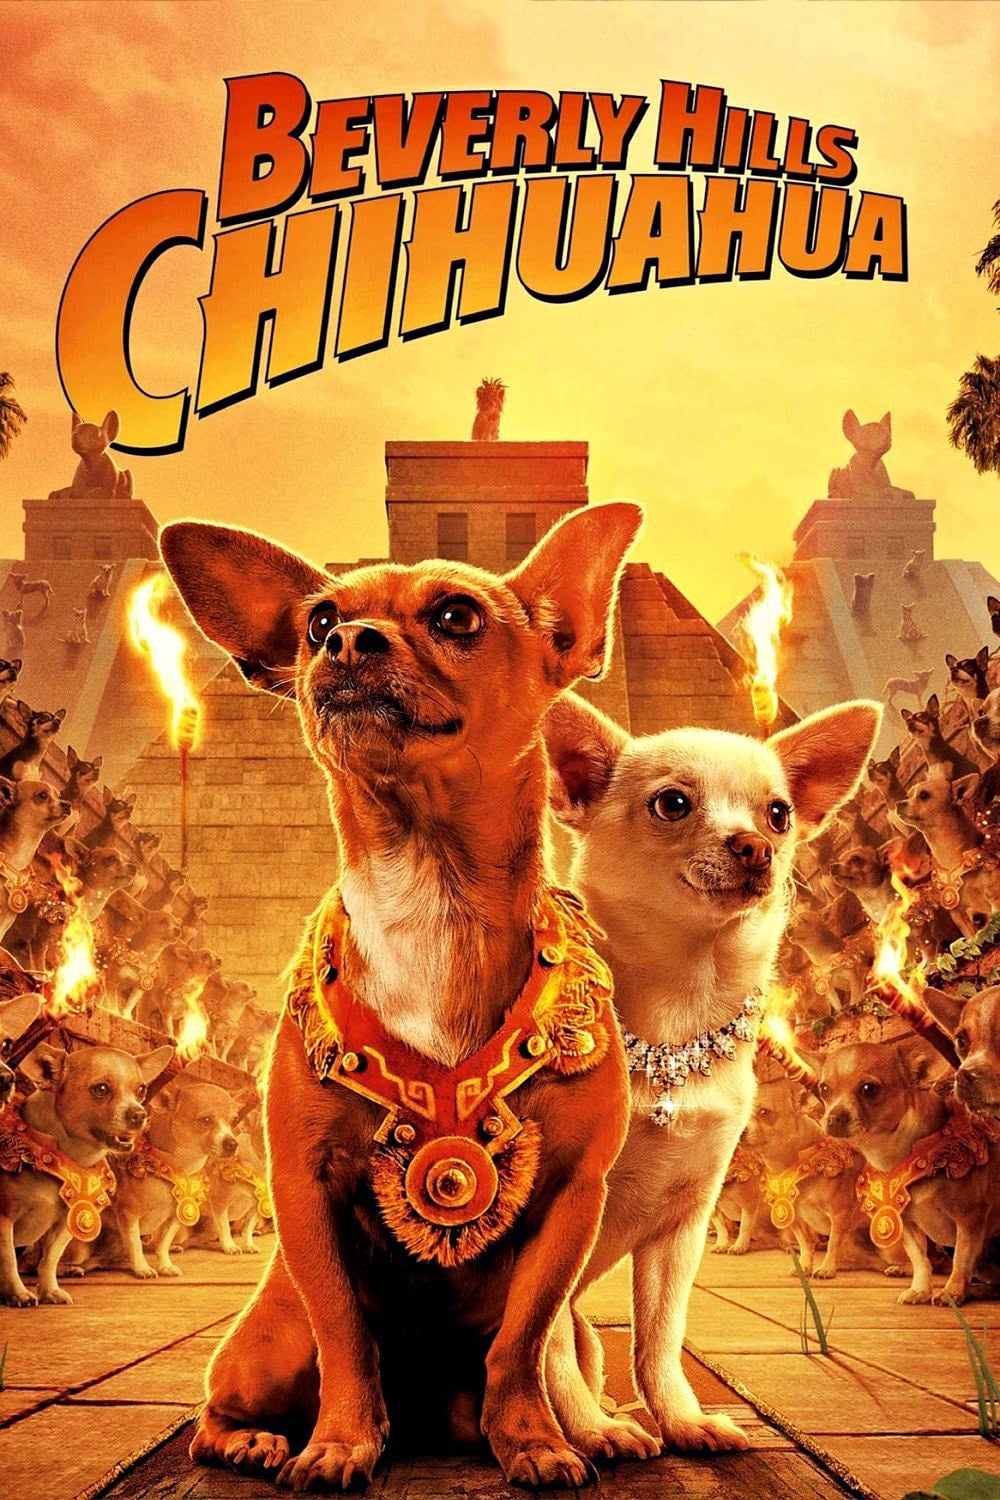 Plakat von "Beverly Hills Chihuahua"